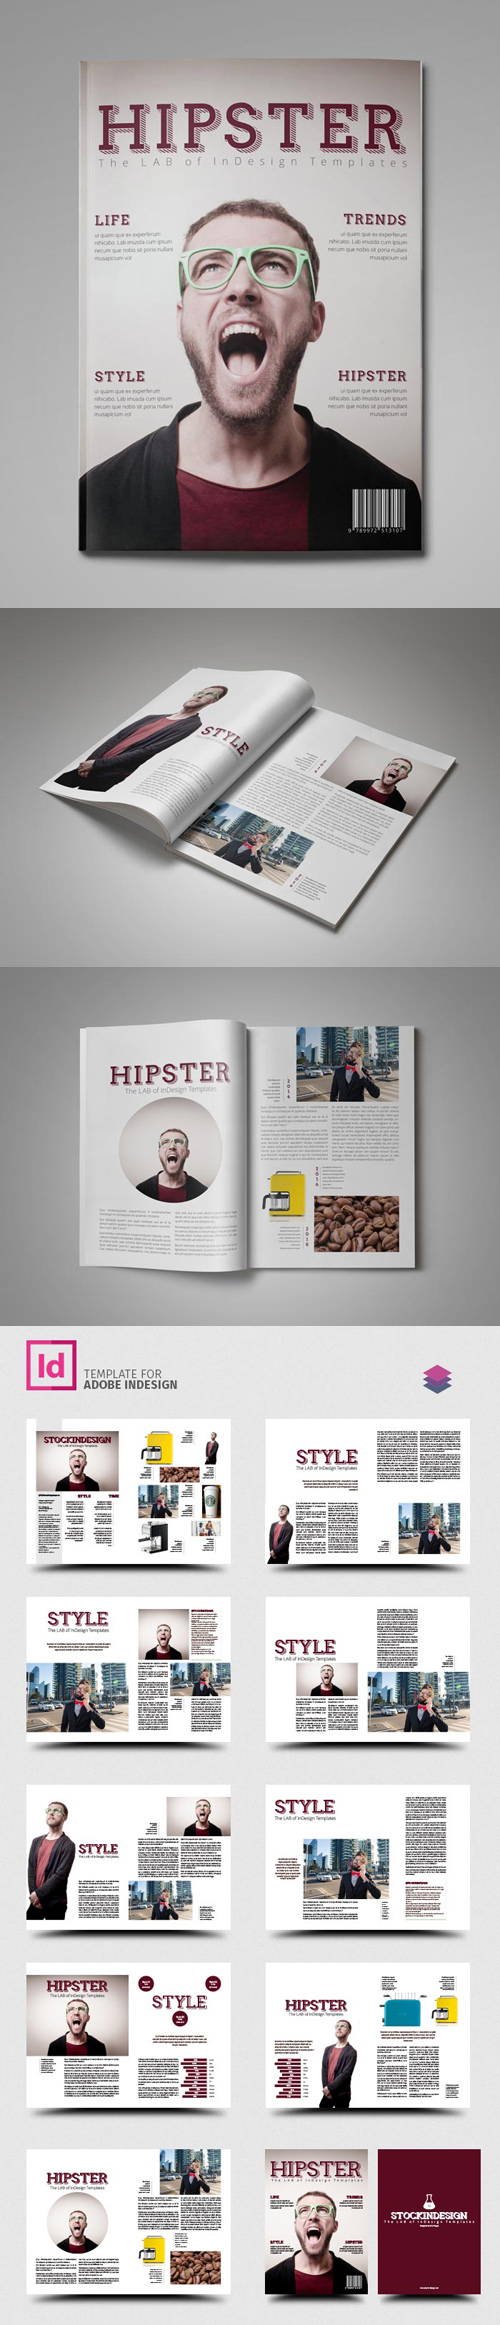 Hipster - PRO Magazine Indesign Template [IDML]